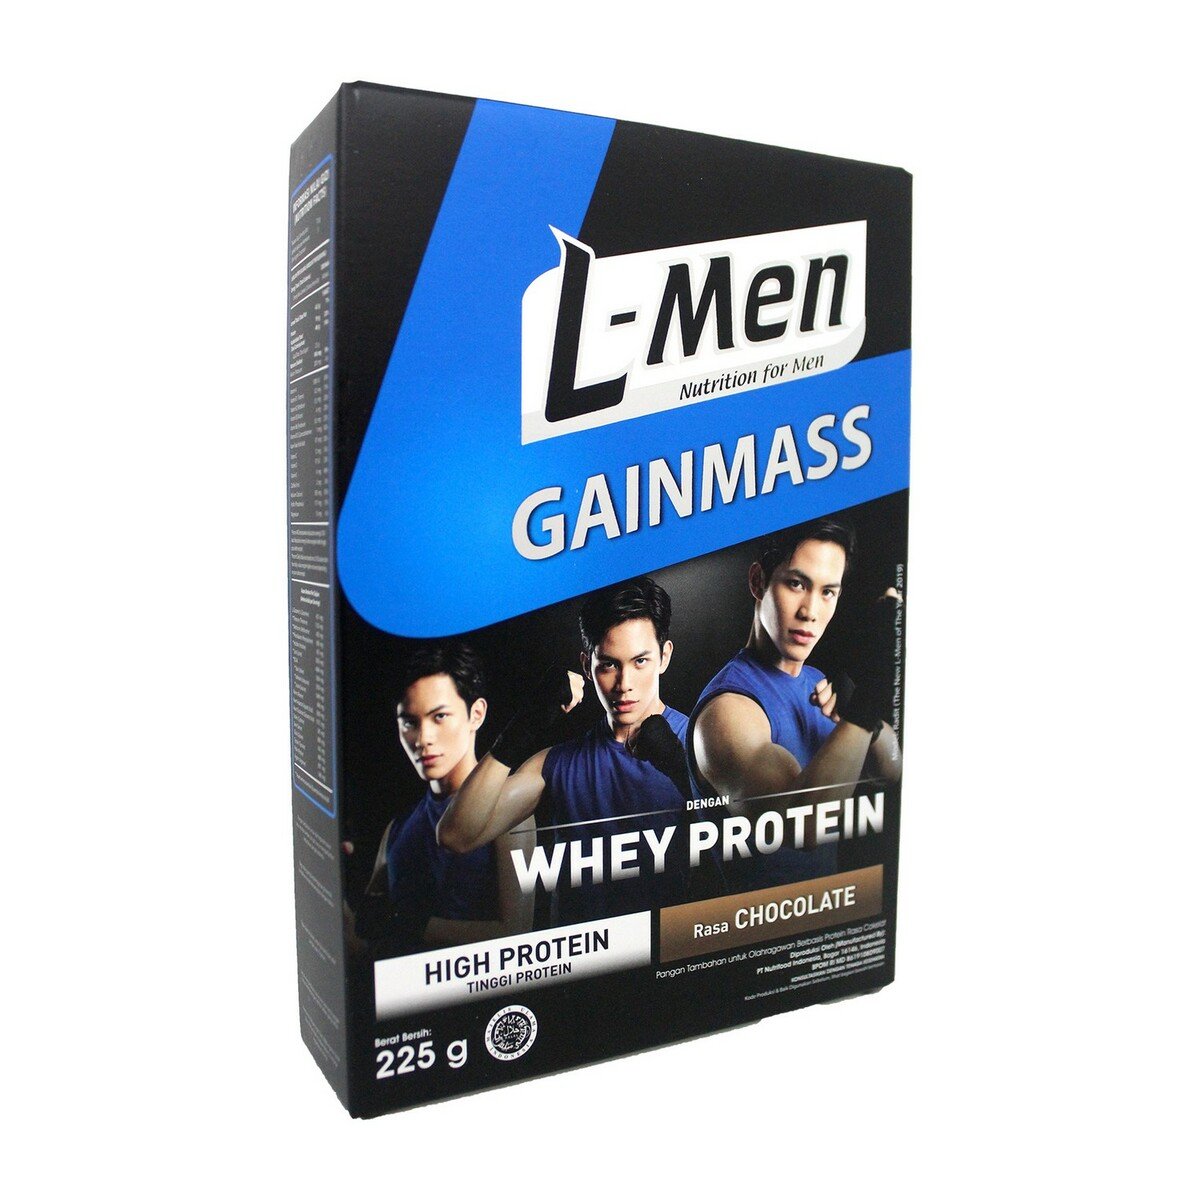 L-Men Gainmass Whey Protein Chocolate 225g